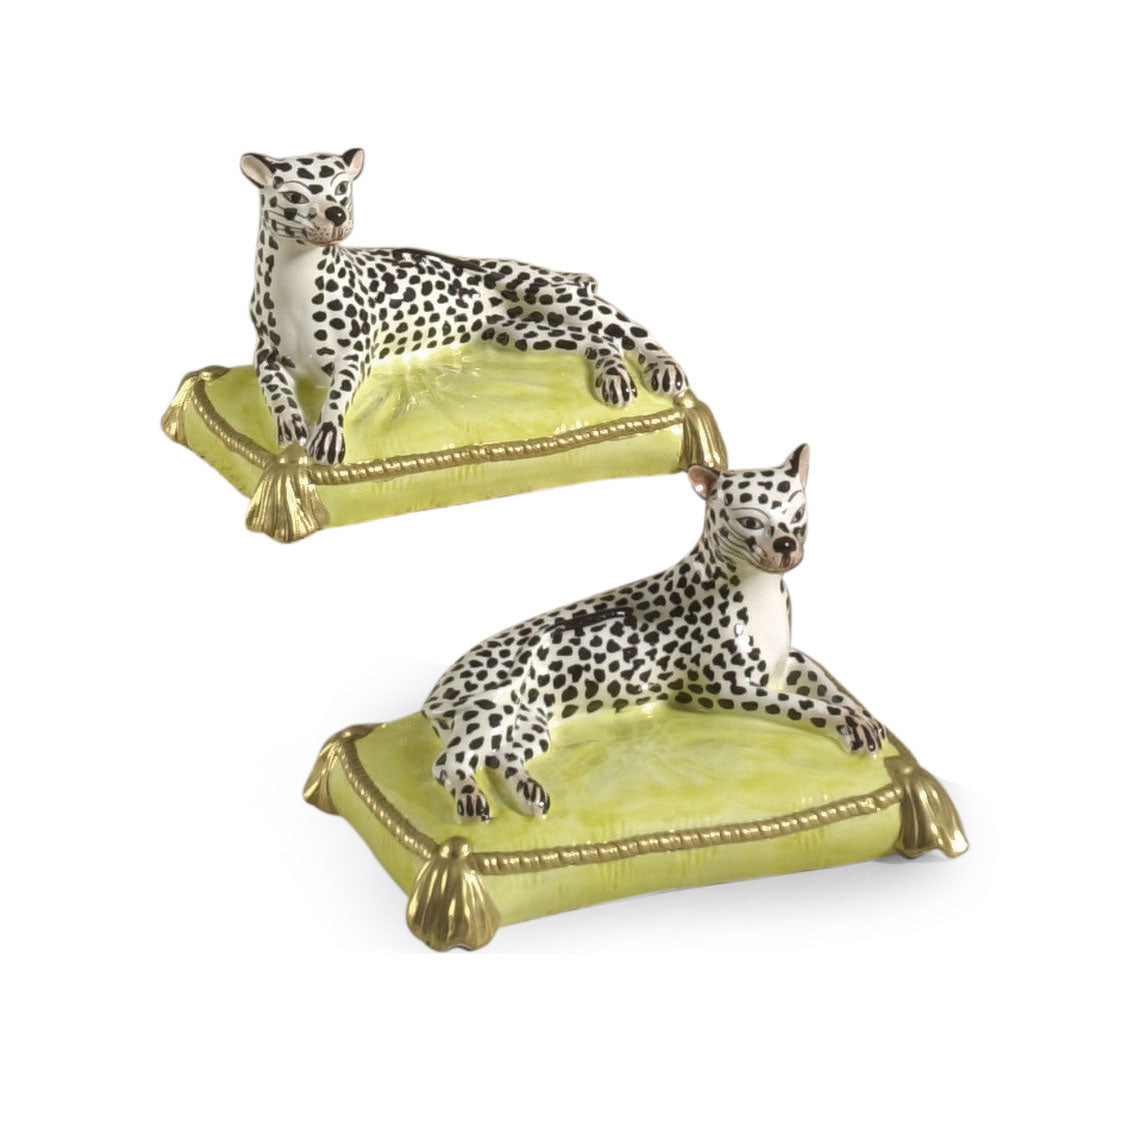 Leopards on Pillows Pair Ceramic Figurines